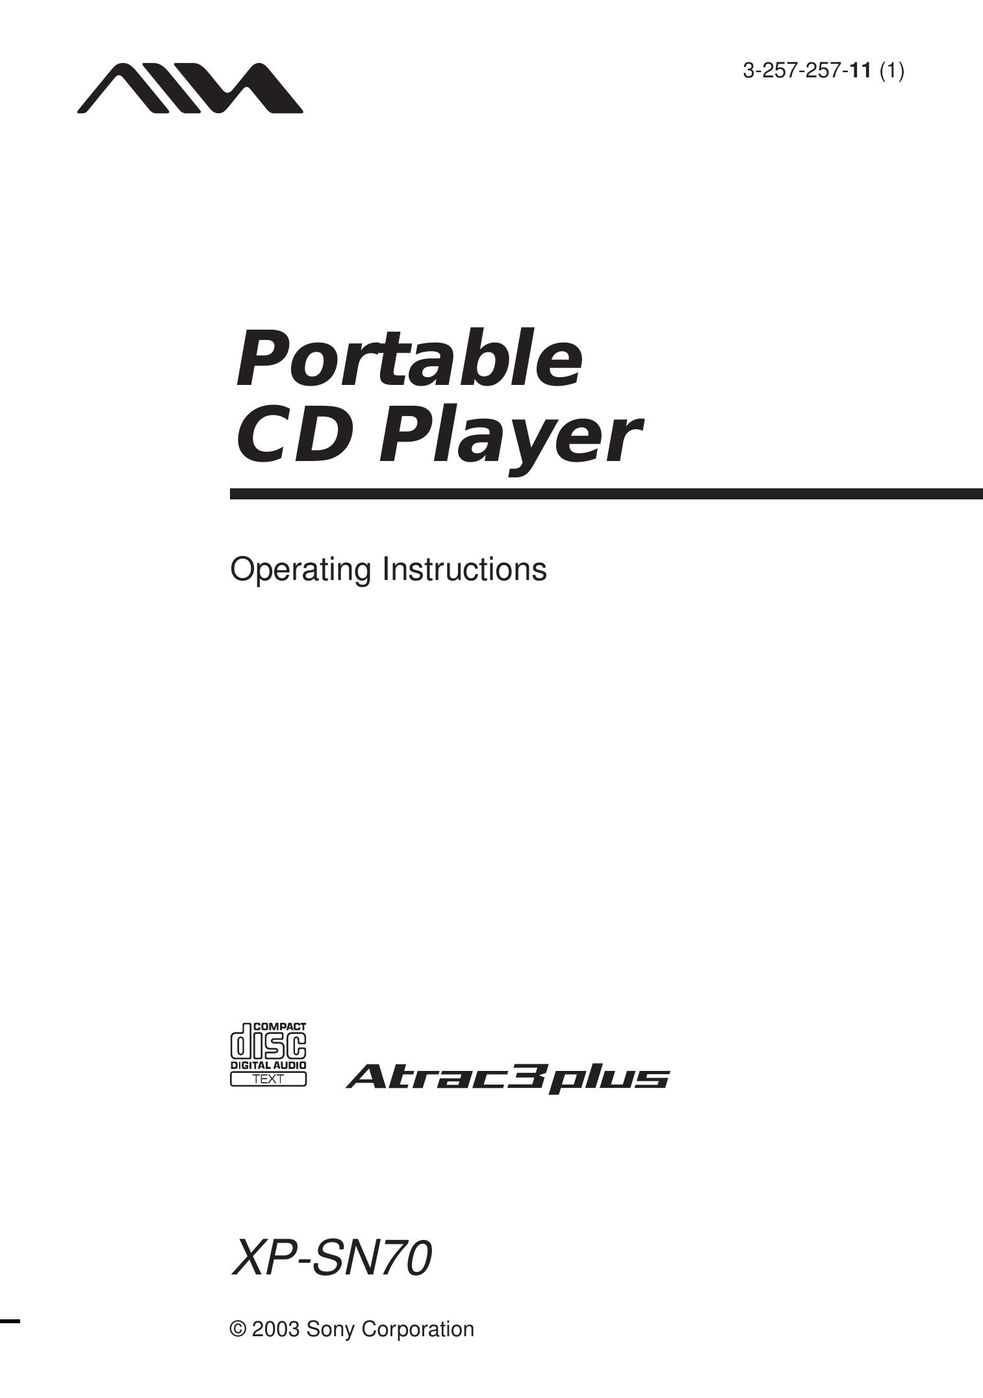 Aiwa XP-SN70 Portable CD Player User Manual